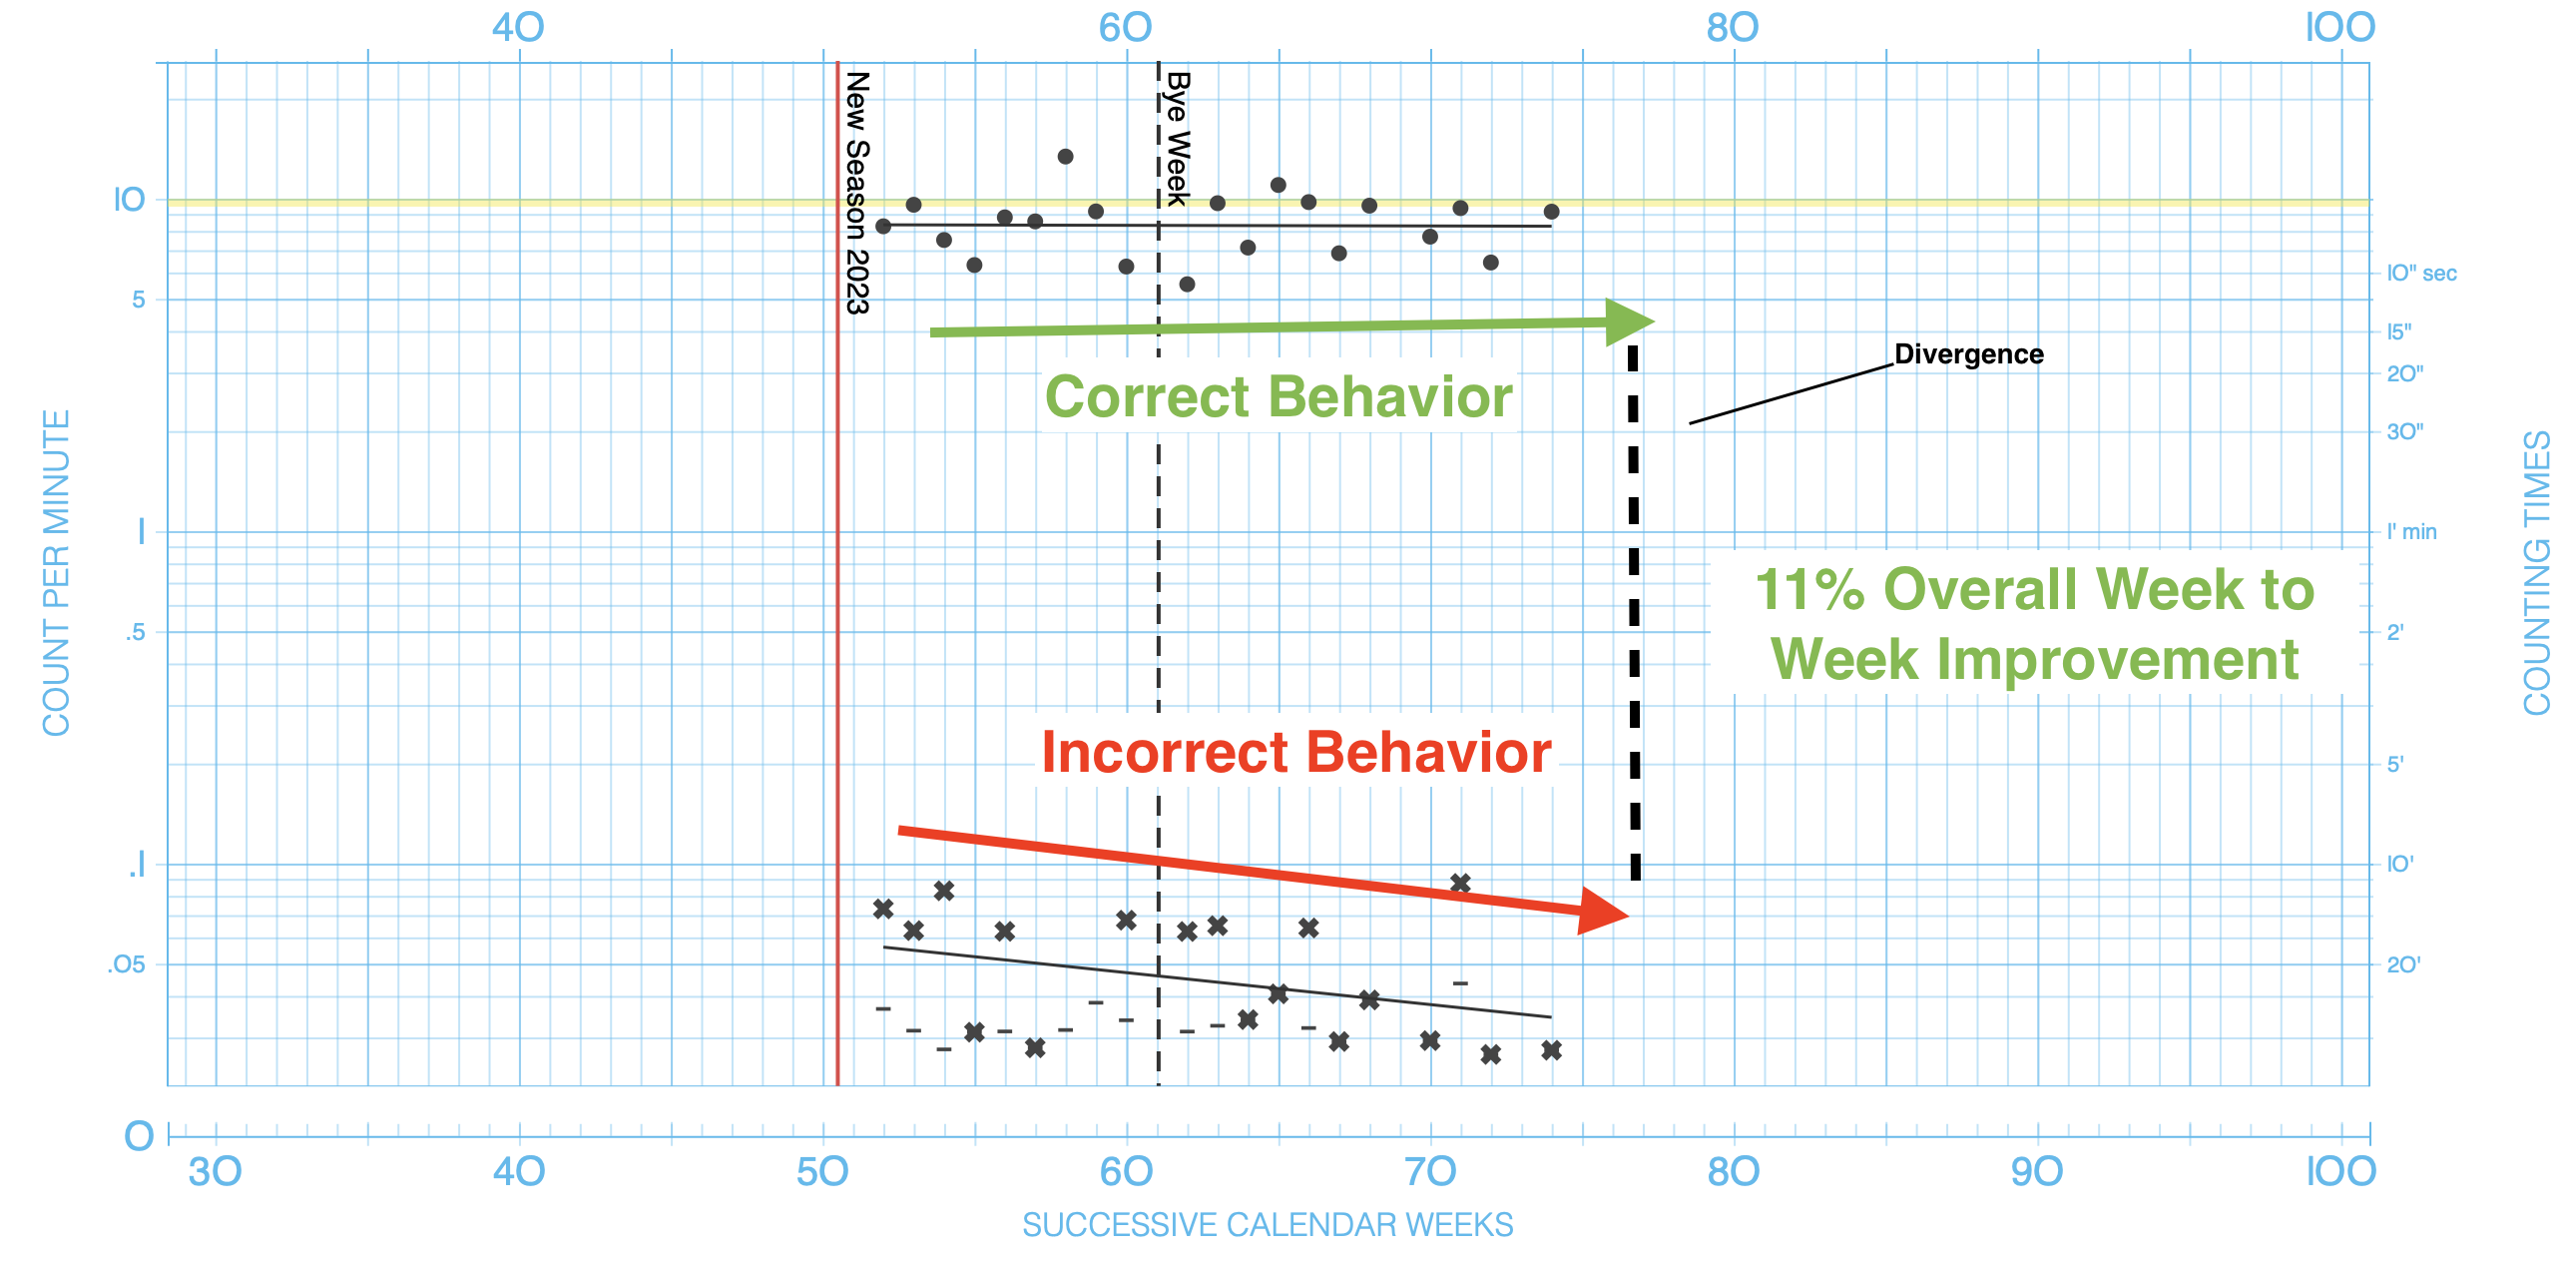 NFL Analytics: Improvement Index Favors Divergence